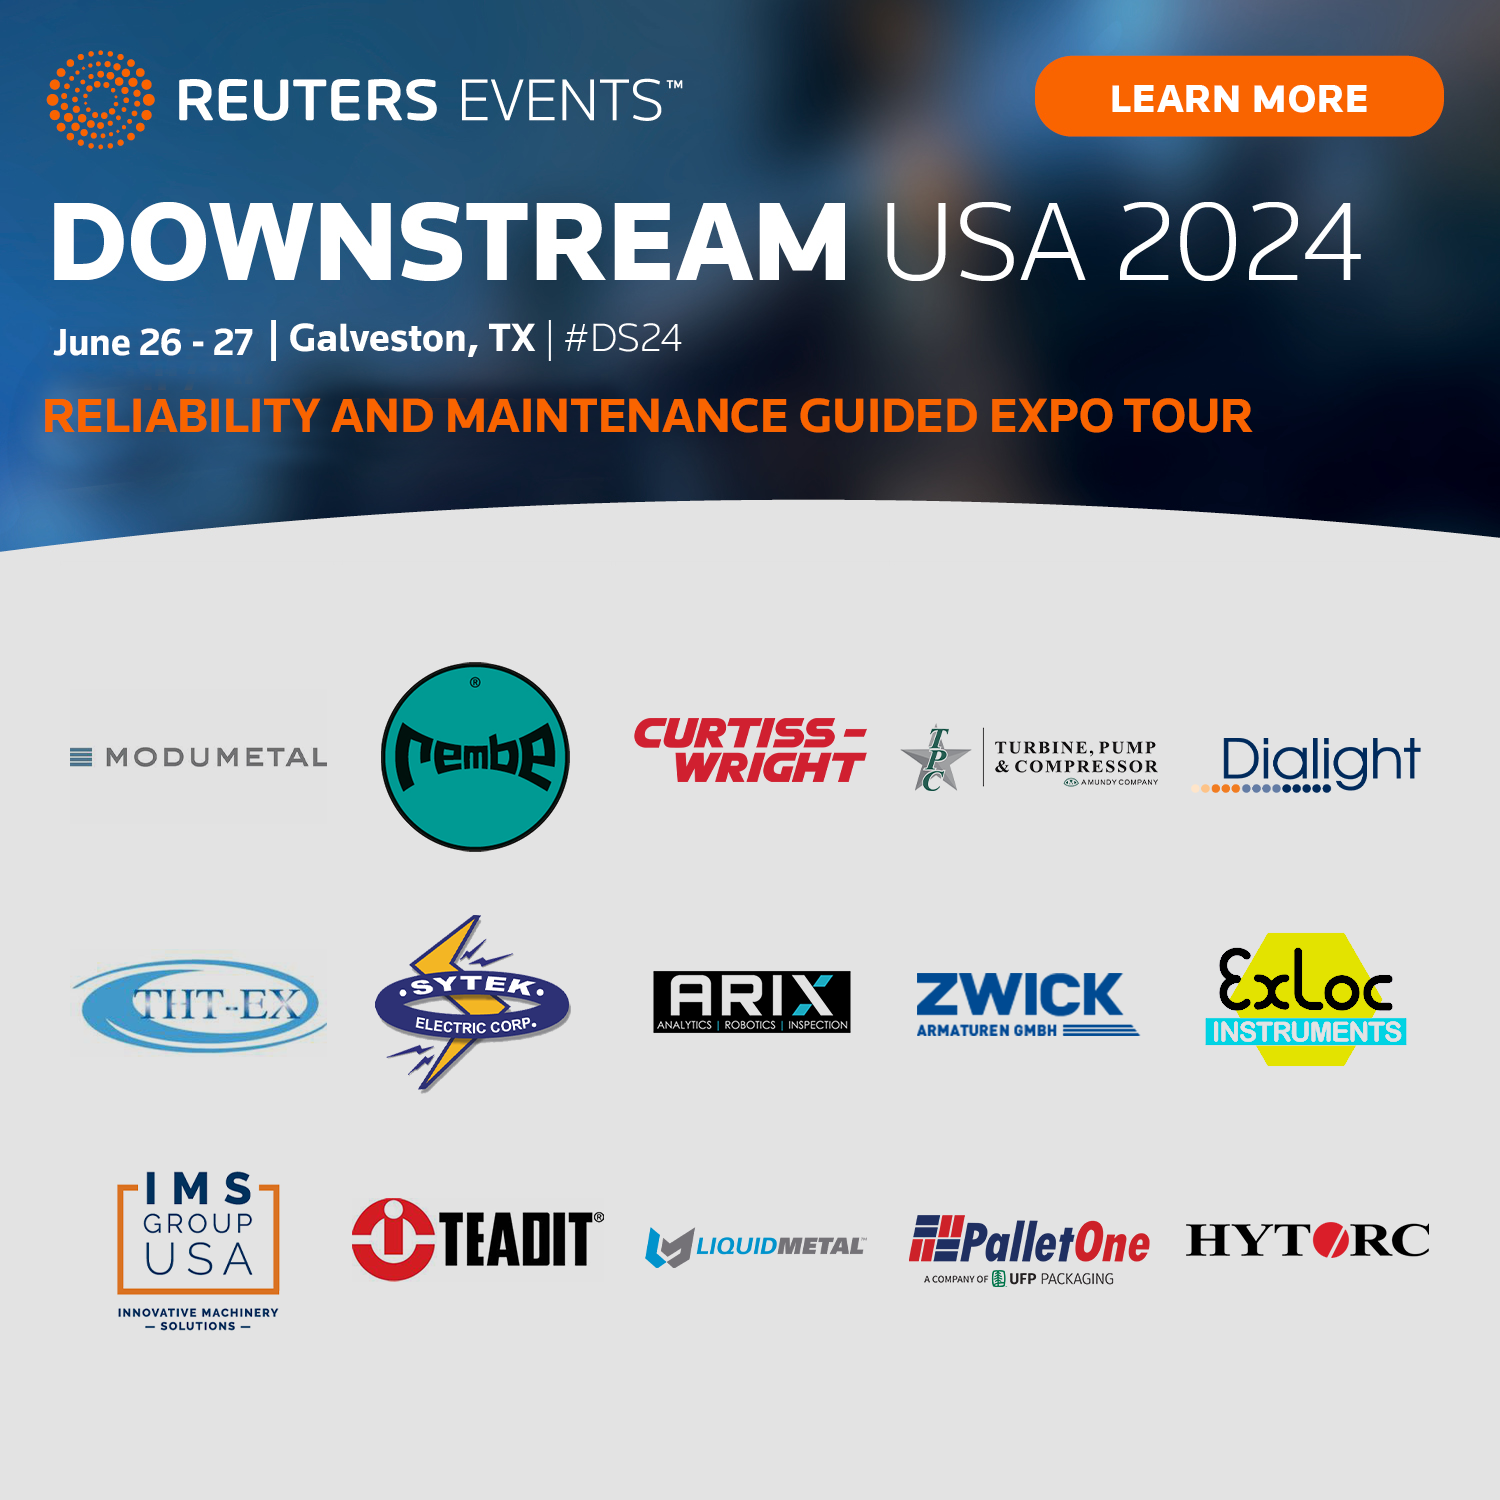 Downstream USA 2024 Reliability & Maintenance Guided Expo Tour!